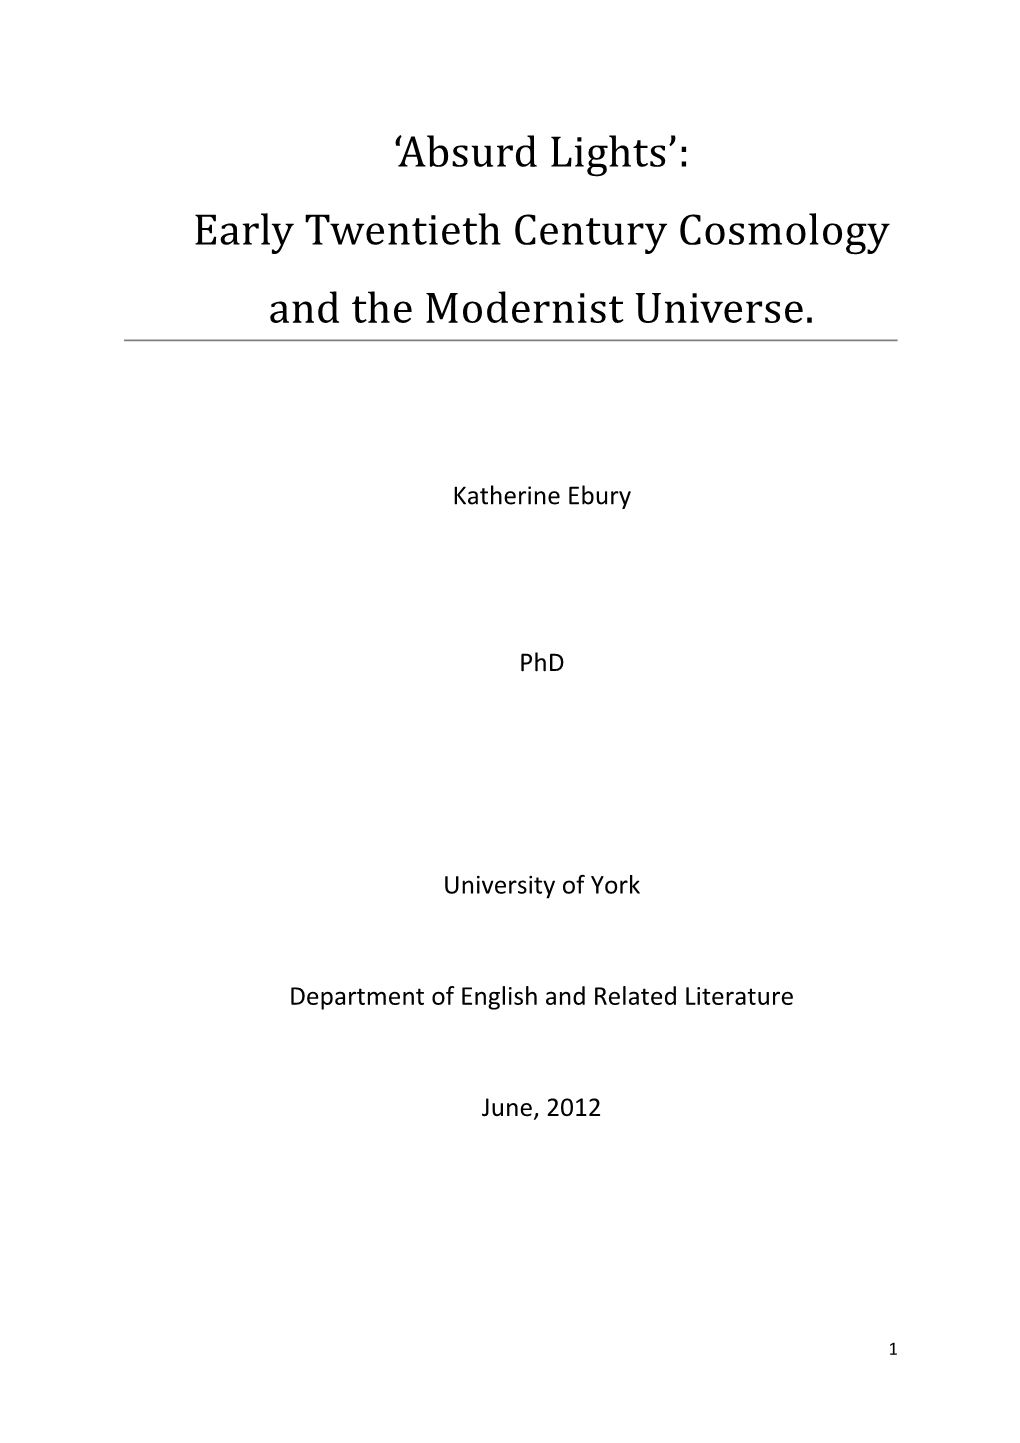 Early Twentieth Century Cosmology